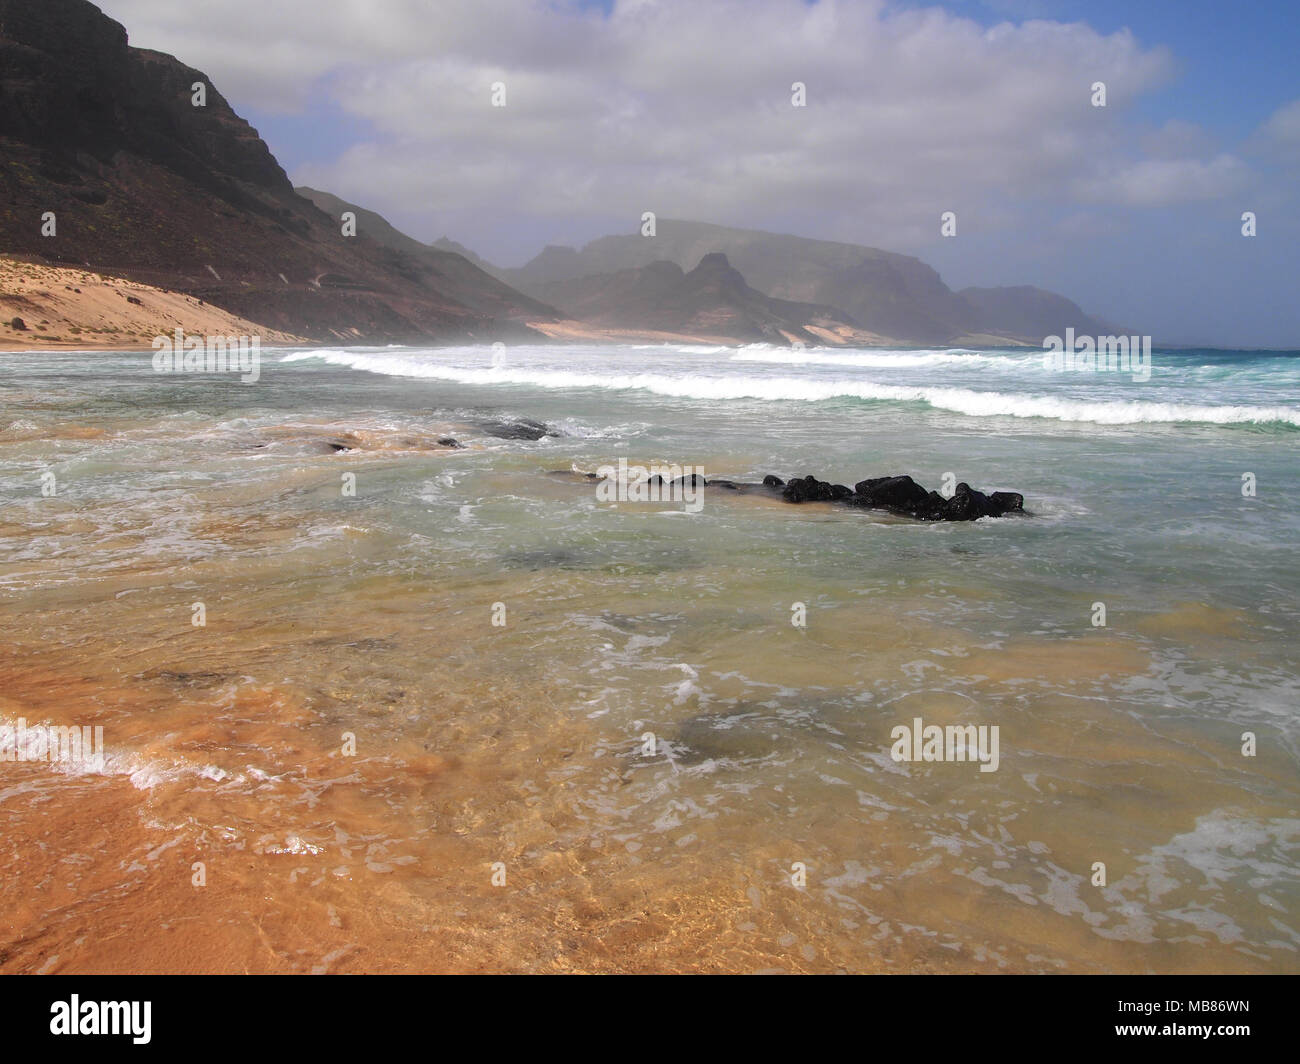 Coast of Sao Vicente, one of the islands in the Cape Verde archipelago Stock Photo